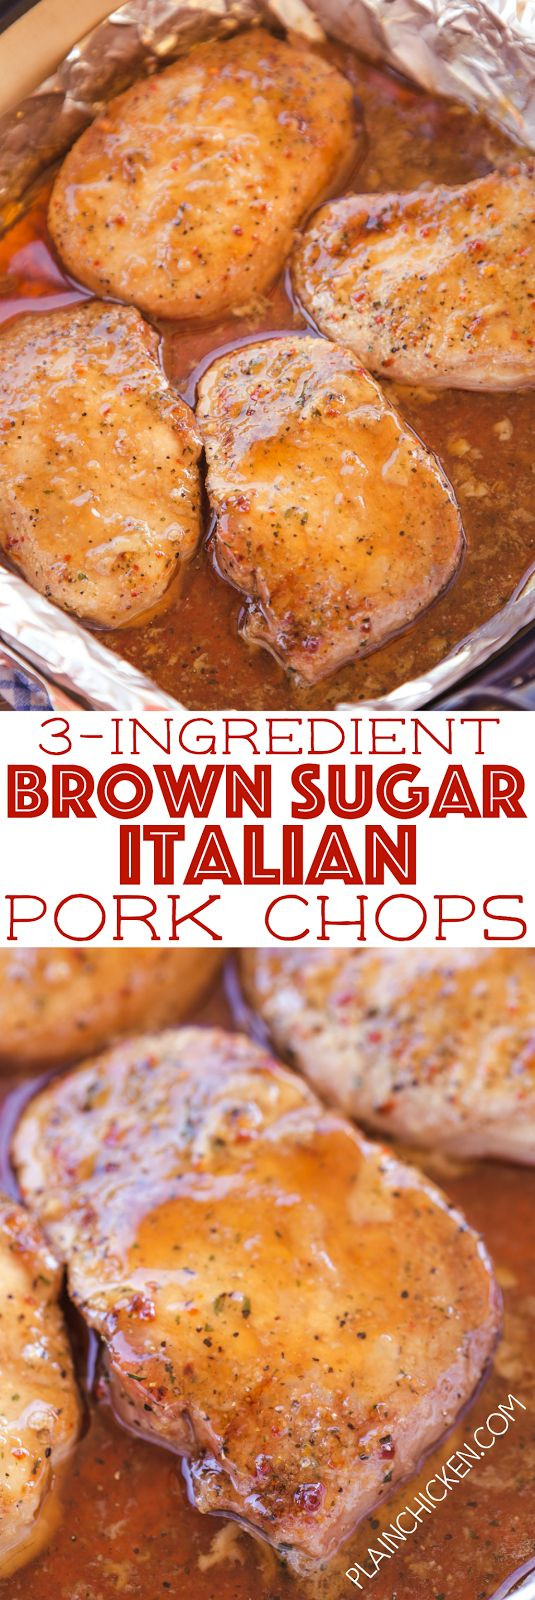 Italian Dressing Pork Chops
 3 Ingre nt Brown Sugar Italian Pork Chops